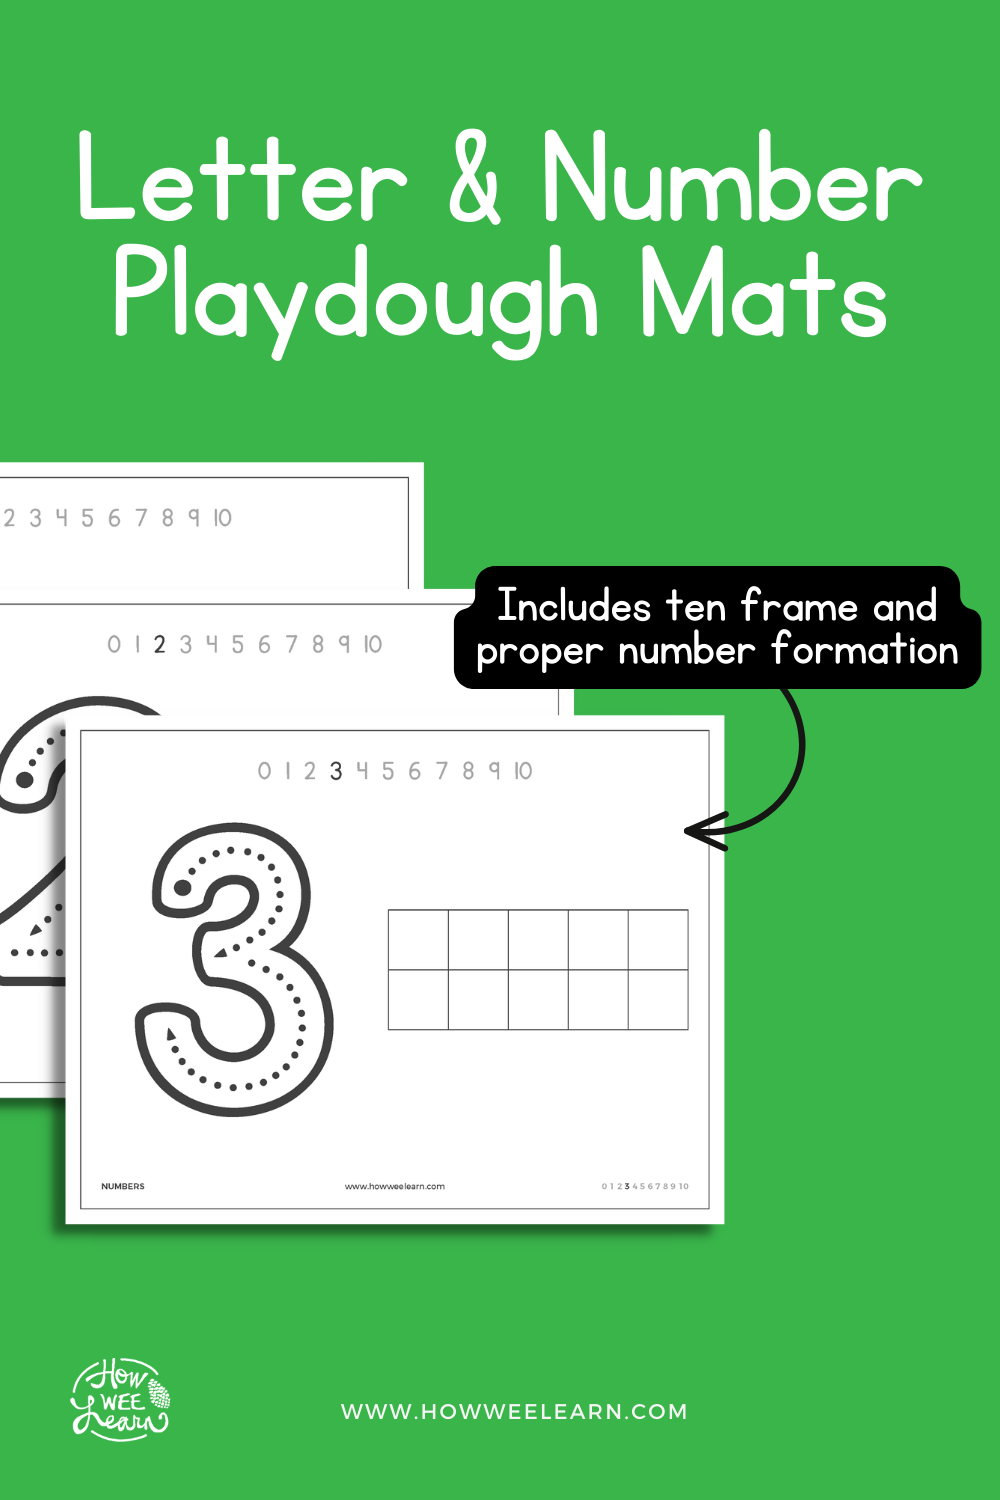 Playdough Mats: Numbers